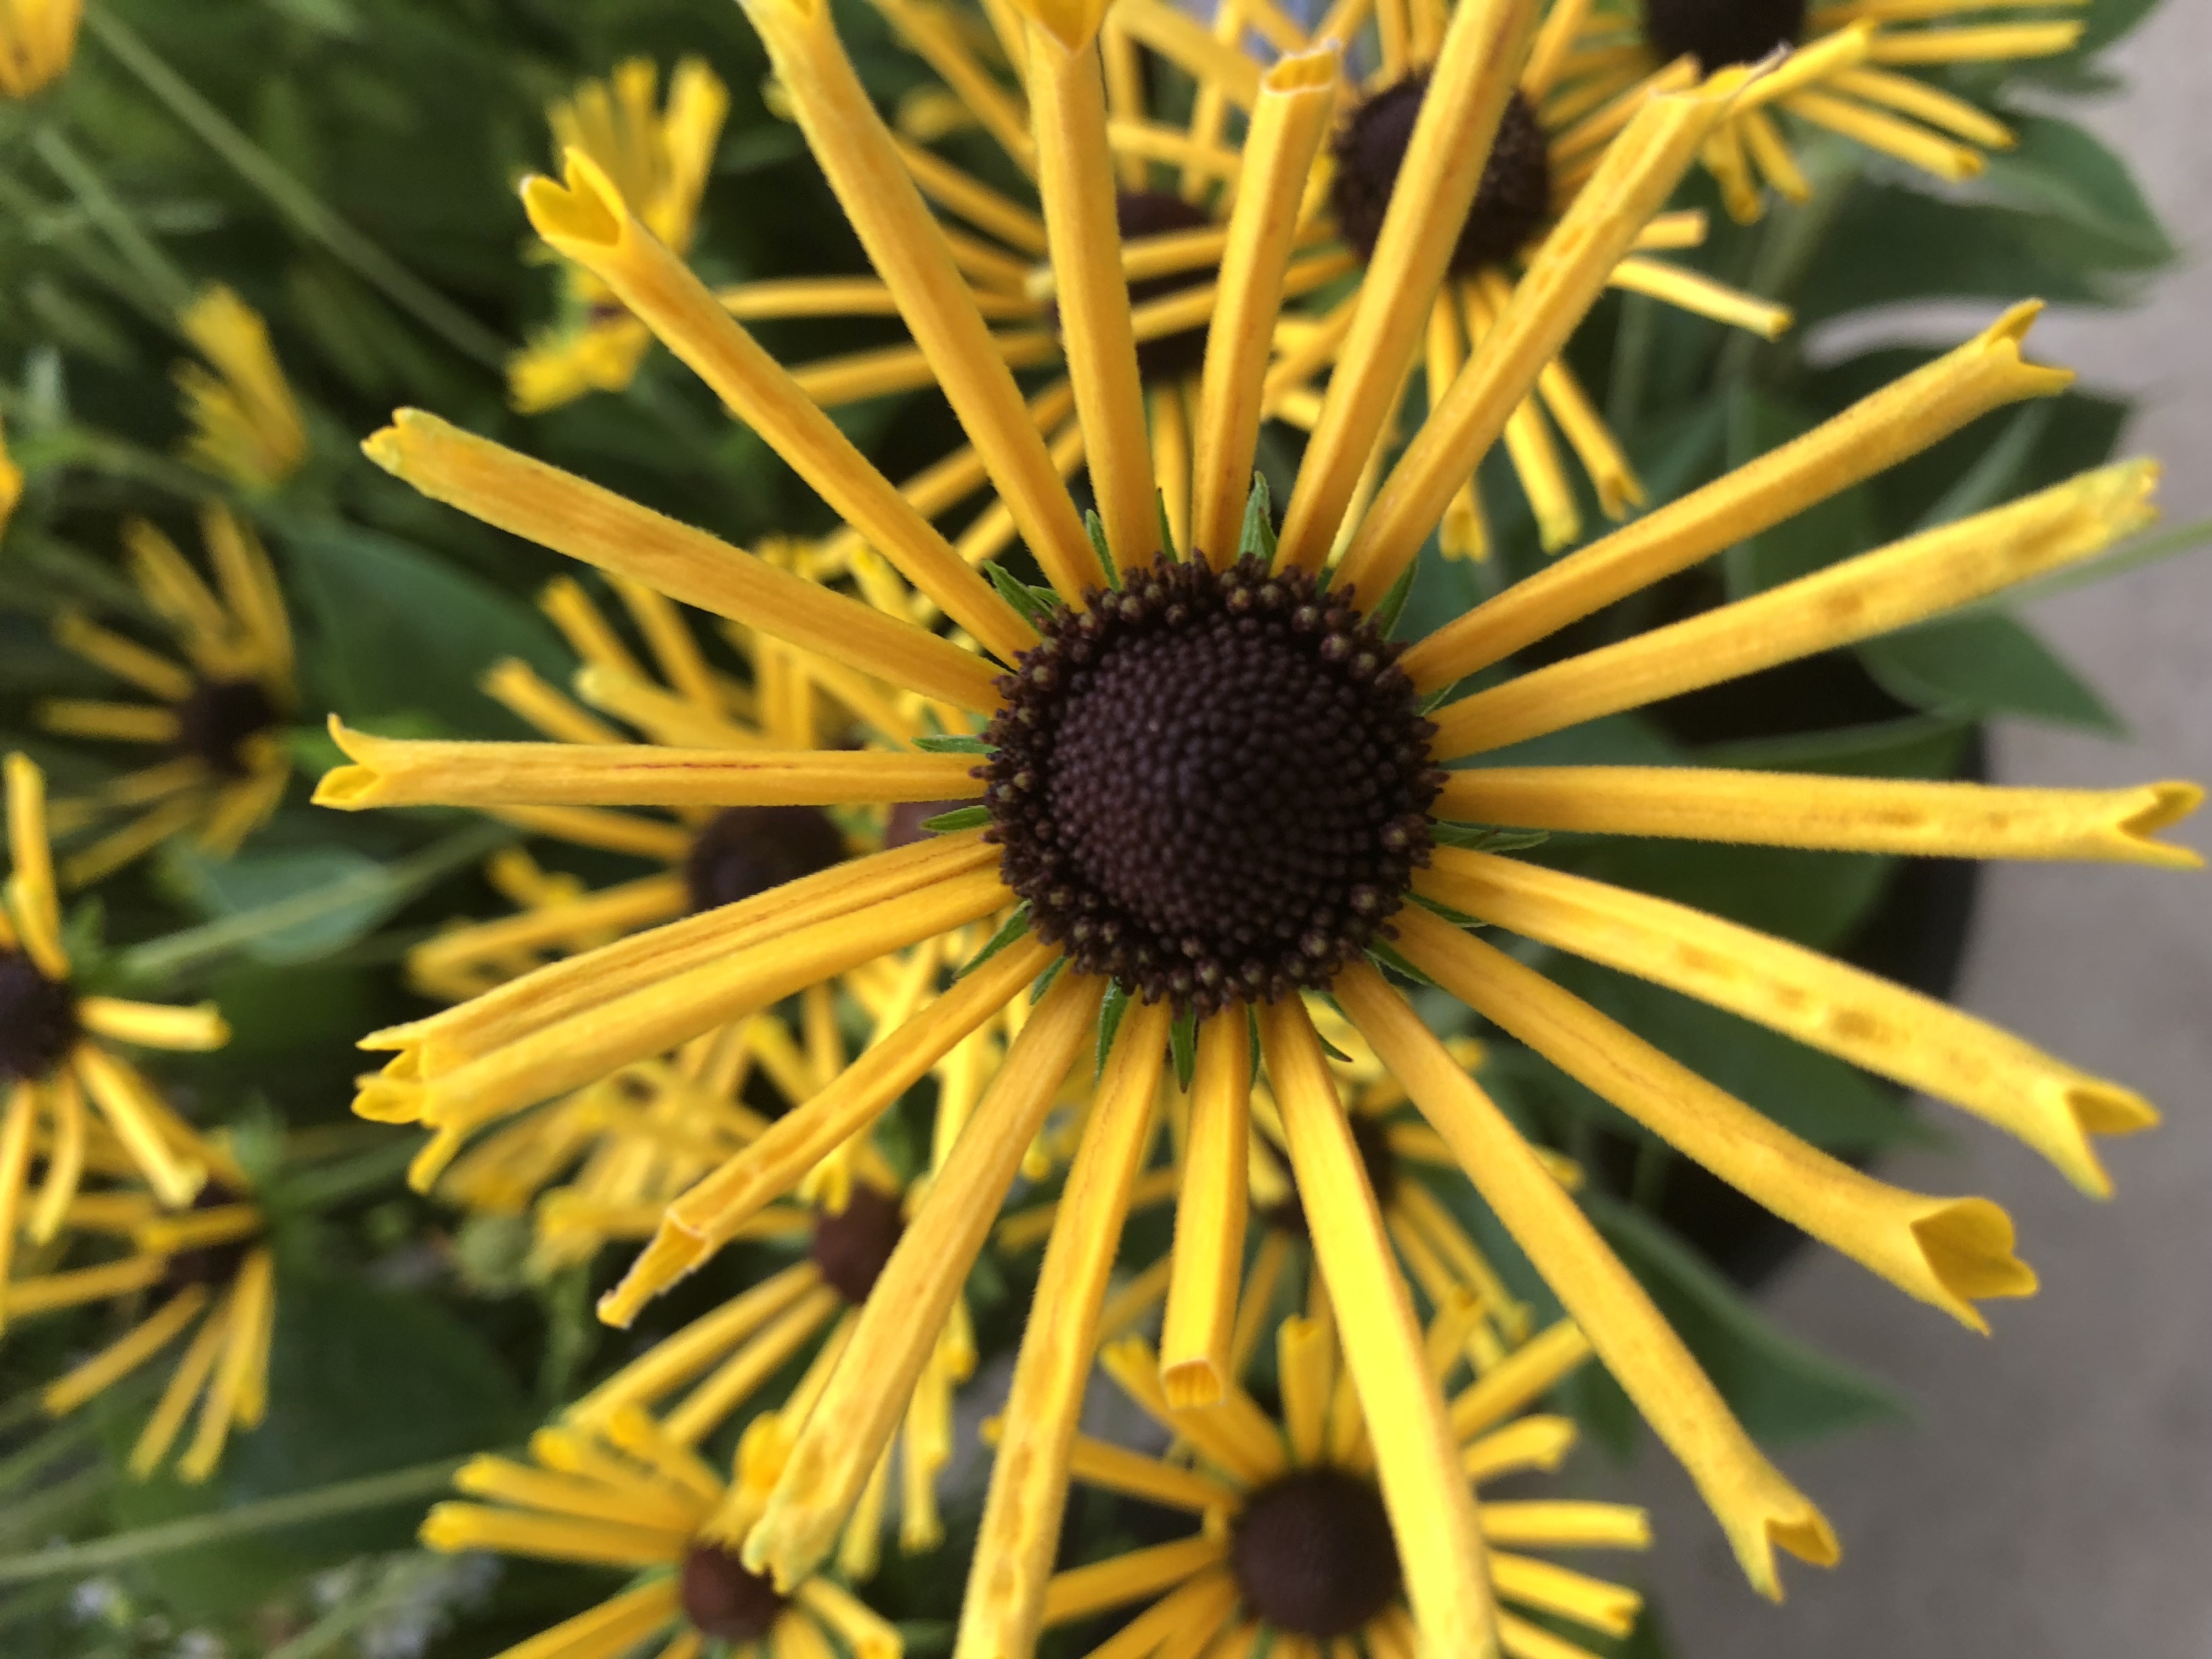 close up of black-eyed Susan flower; black center with gold narrow petals